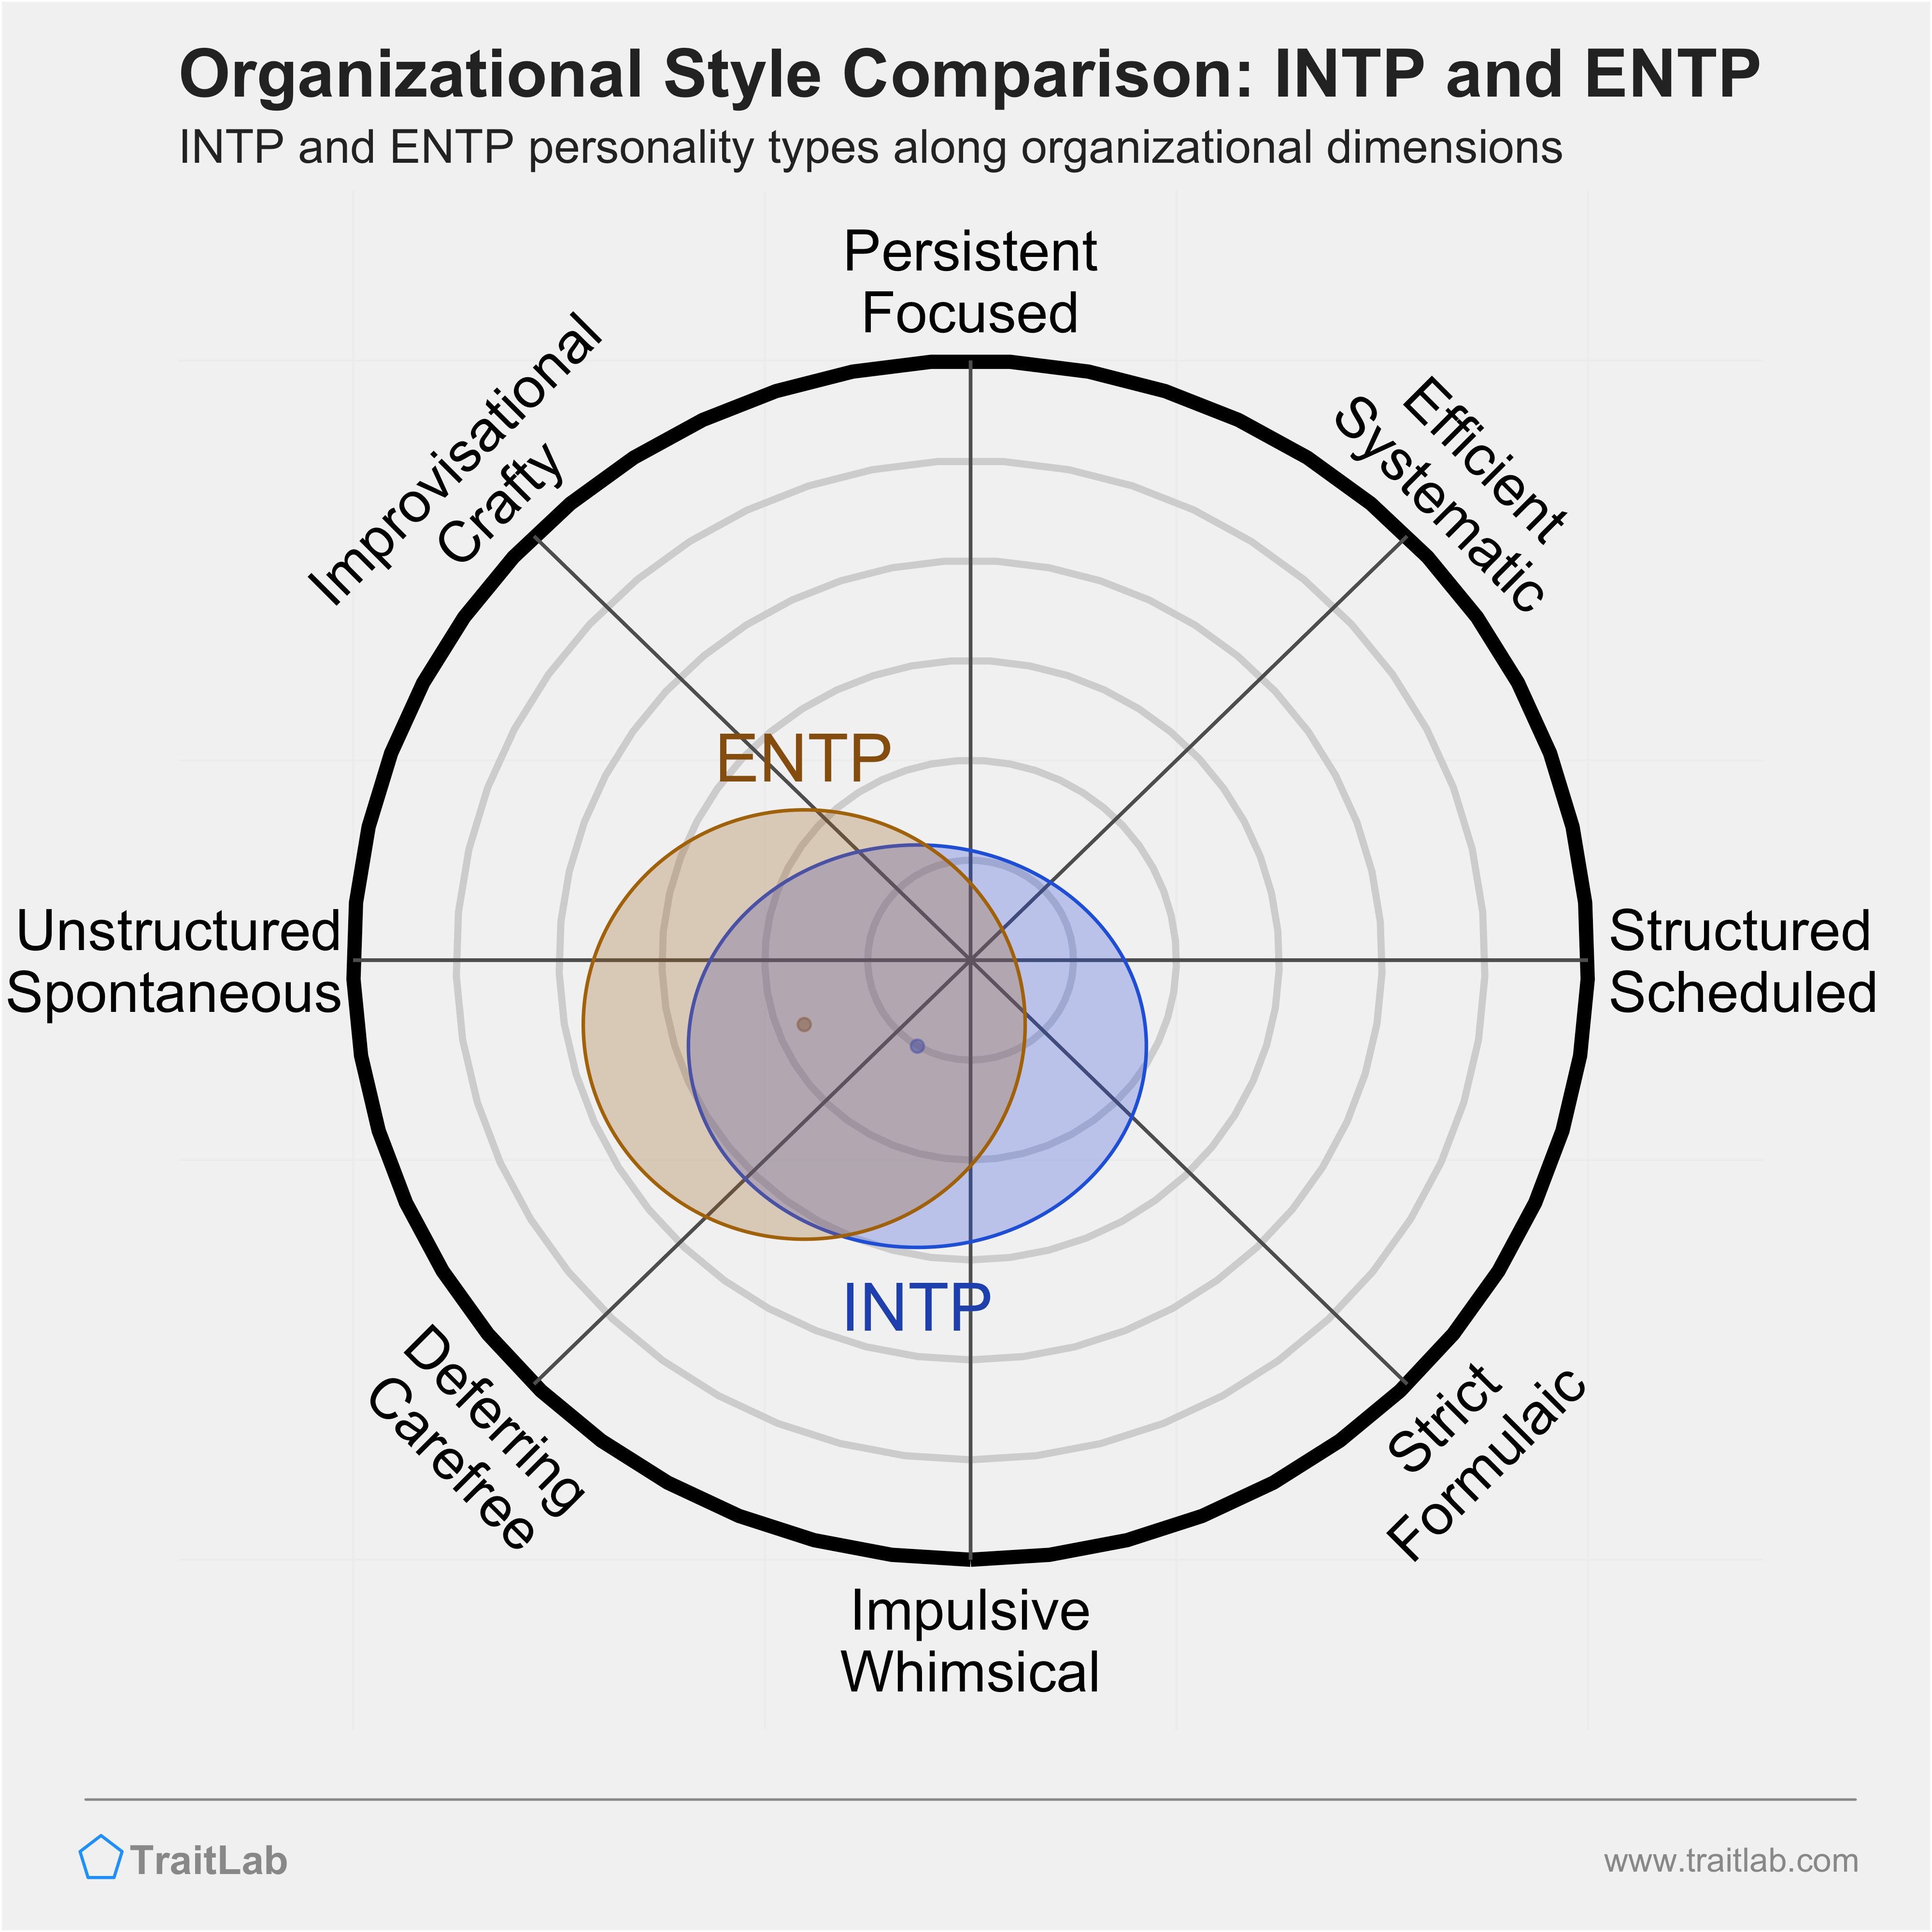 INTP and ENTP comparison across organizational dimensions